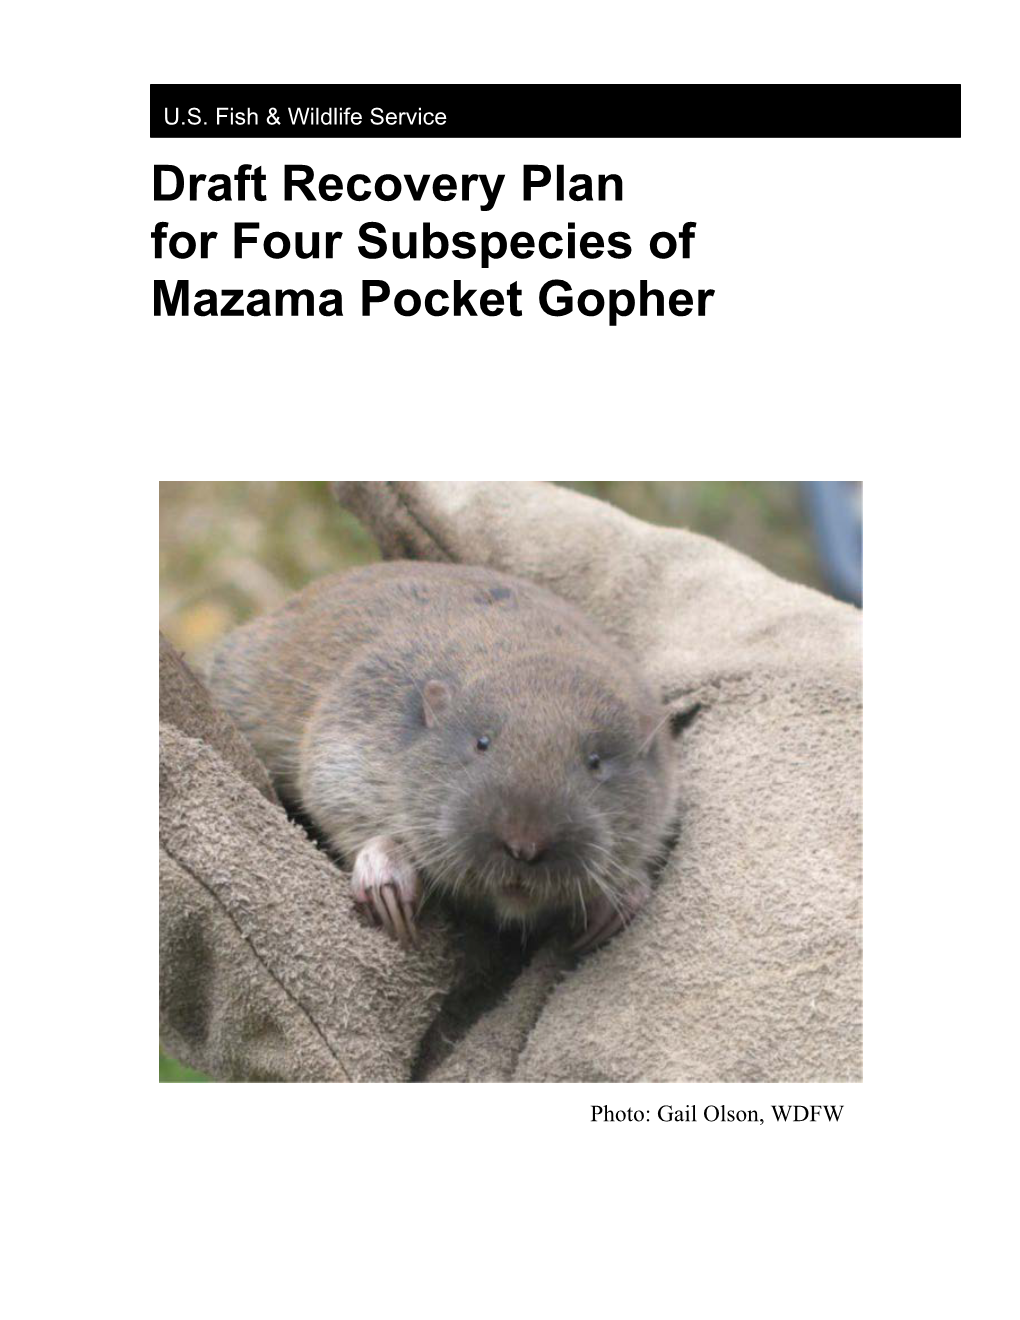 Mazama Pocket Gopher Draft Recovery Plan